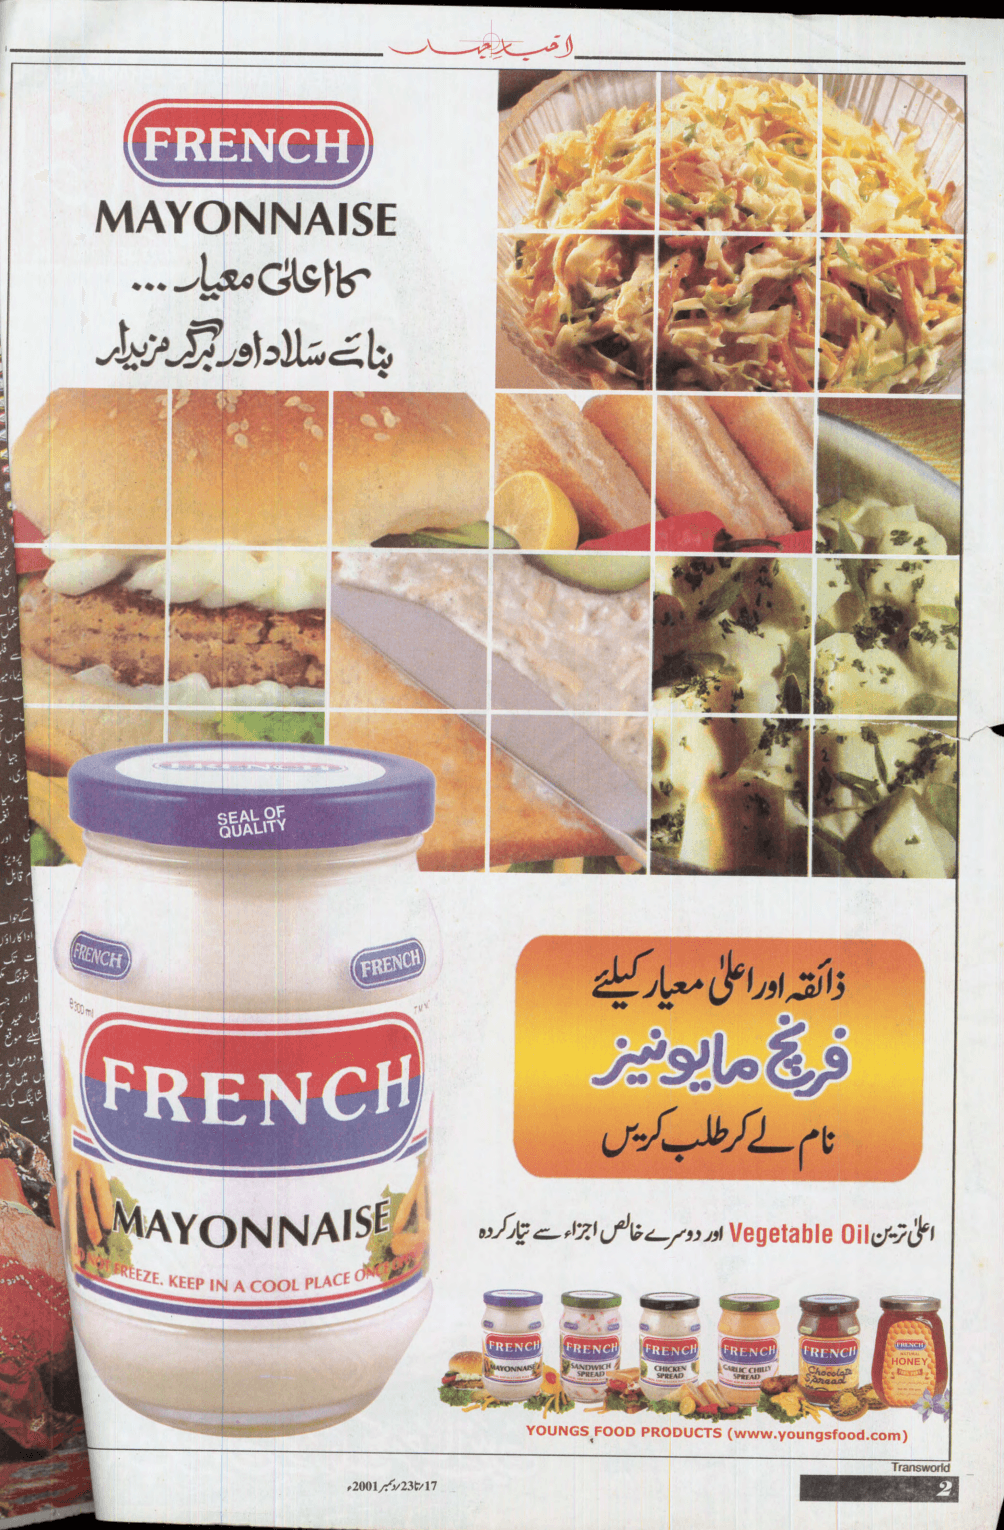 Akhbar-e-Jahan (Dec 17, 2001) - KHAJISTAN™